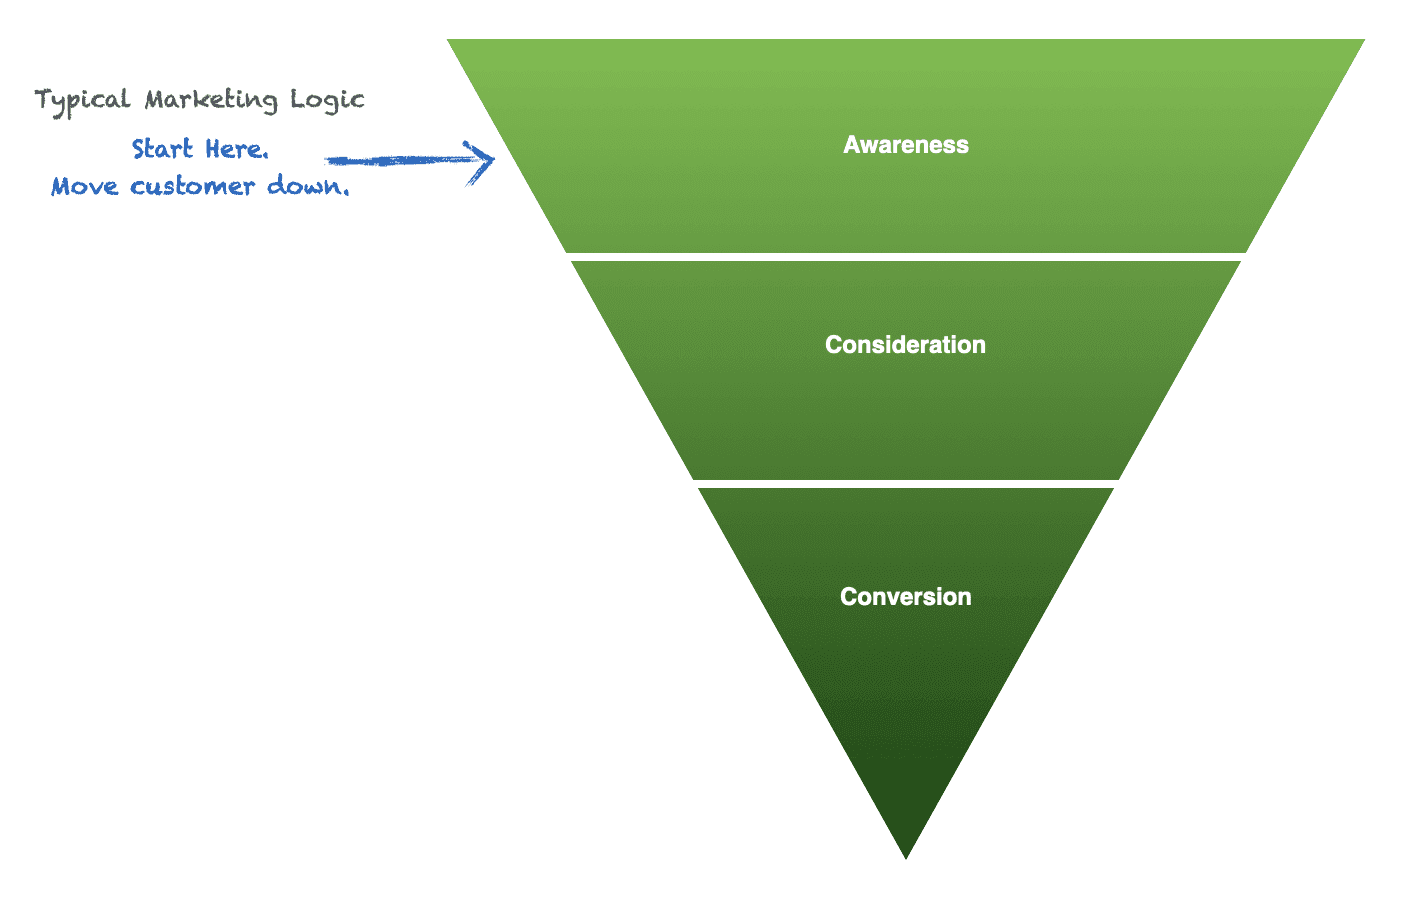 Typical Marketing Logic: Awareness, Consideration, Conversion